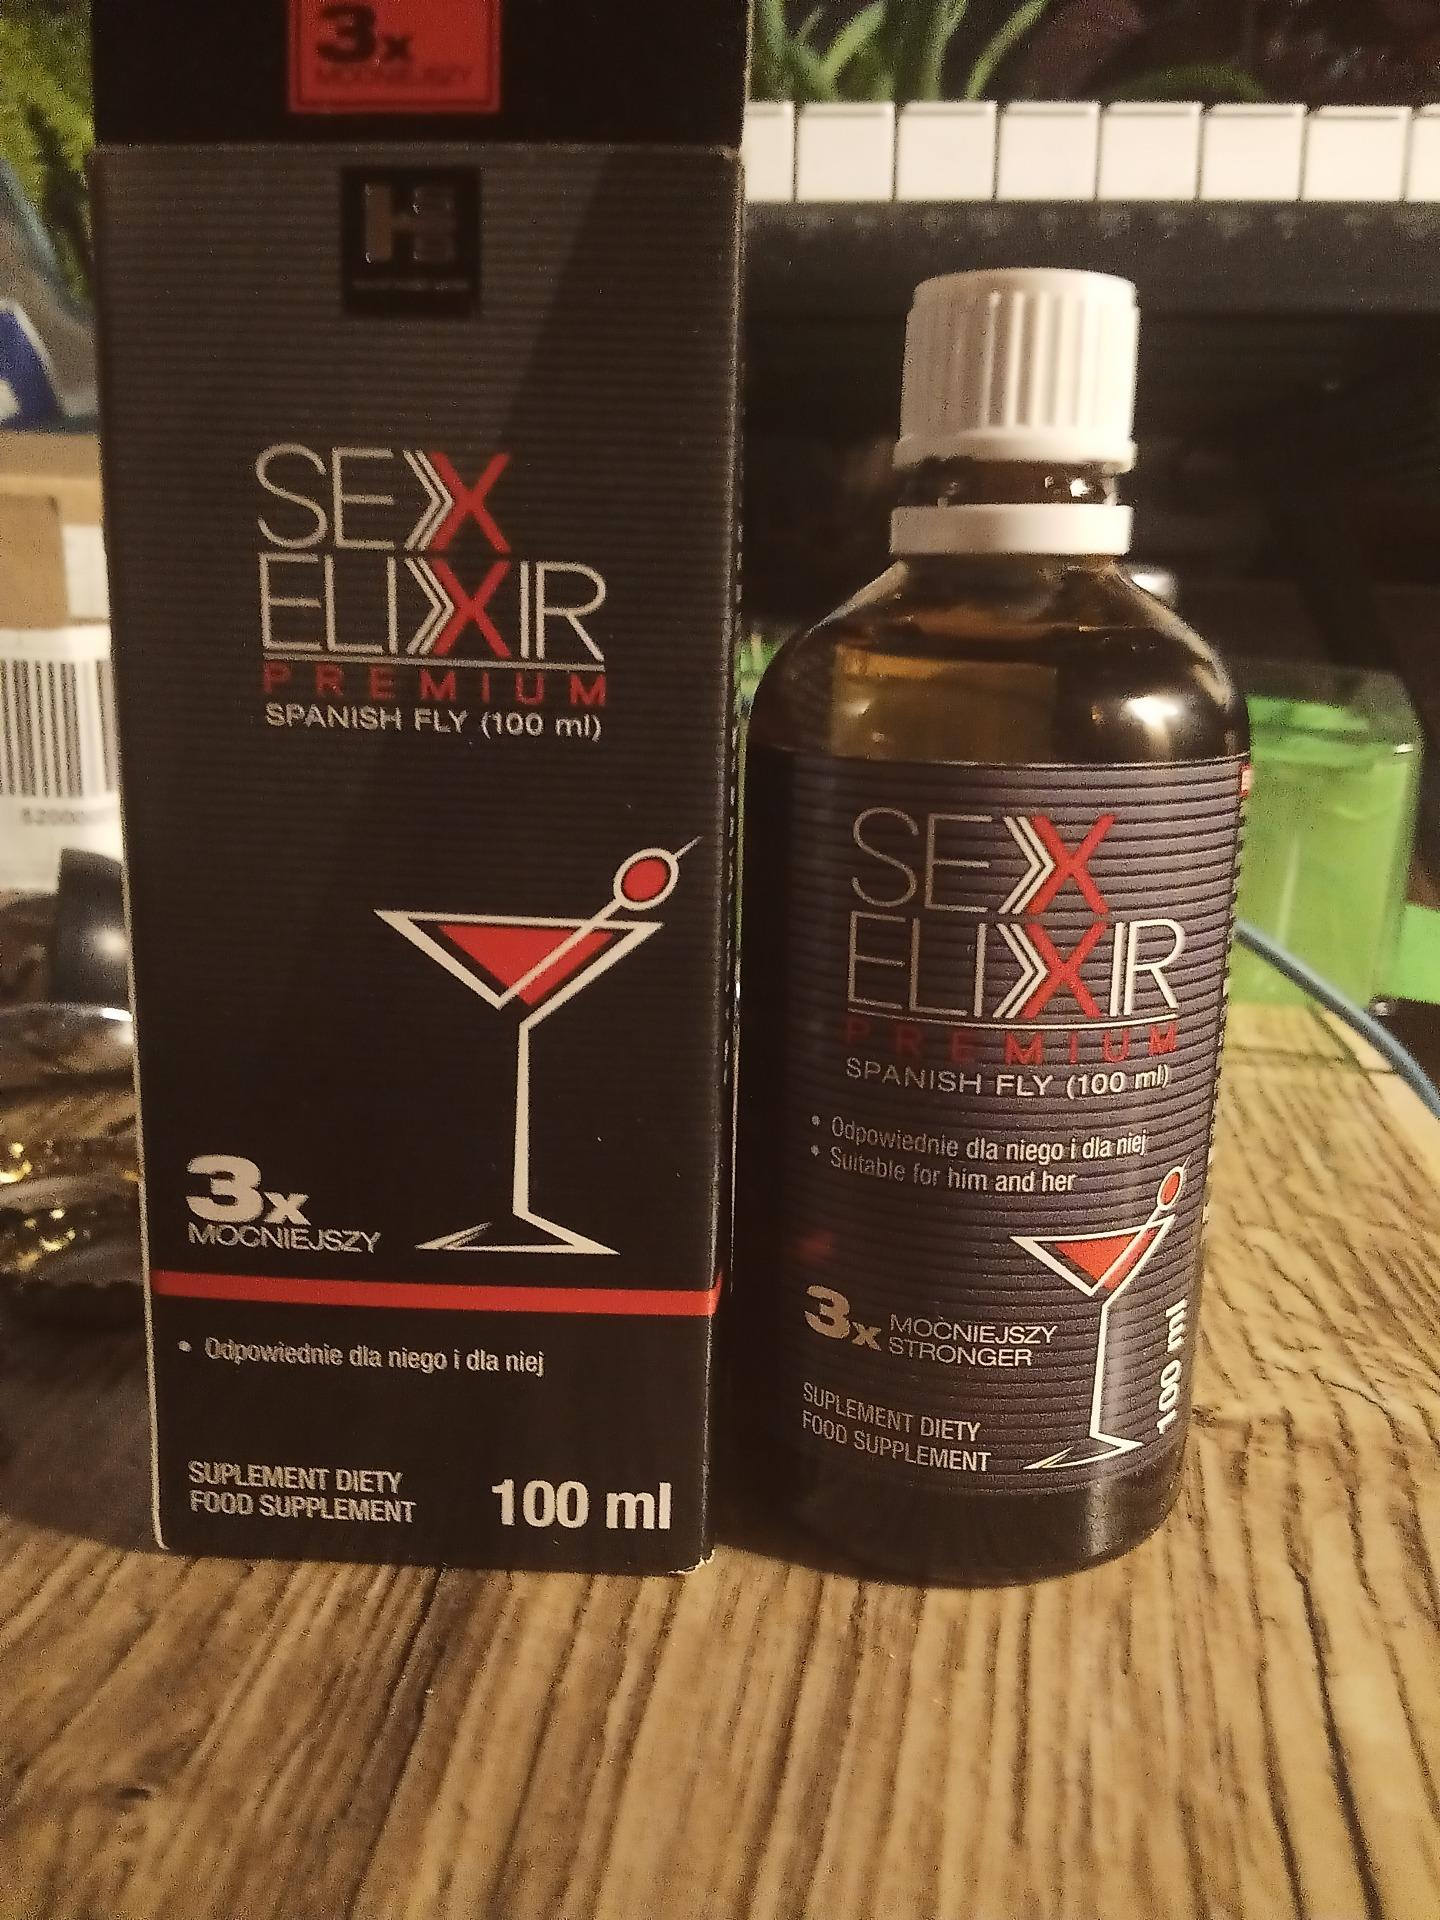 Shs Sex Elixir Premium HiszpaŃska Mucha 100ml Ceneopl 8750